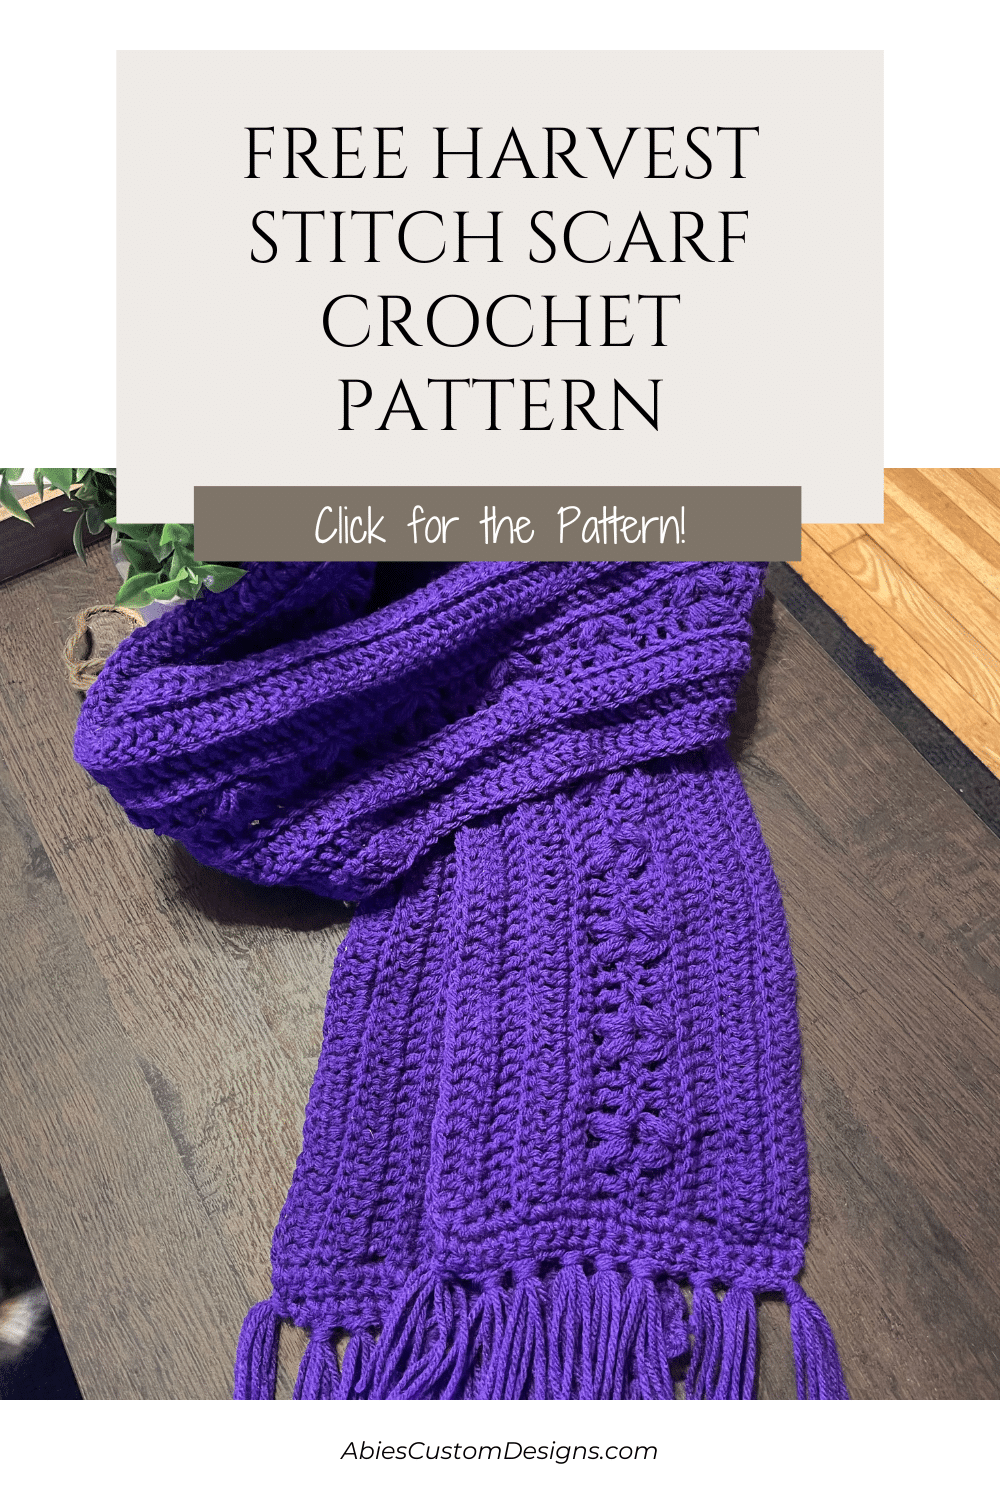 Free Harvest Stitch Scarf Crochet Pattern